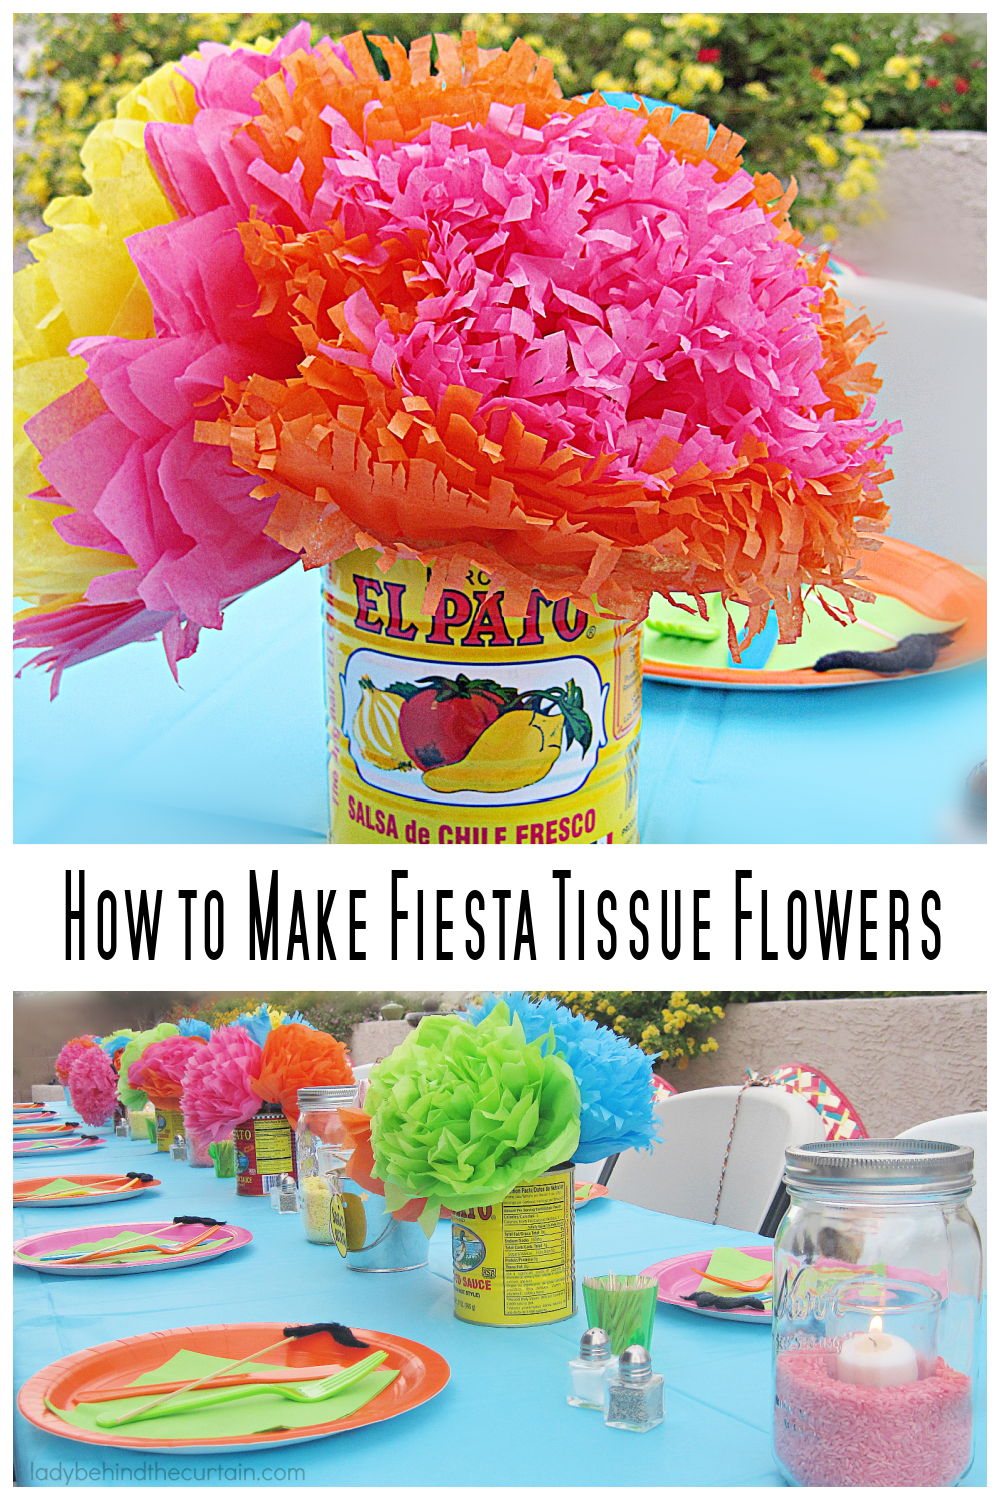 How to Make Fiesta Tissue Flowers